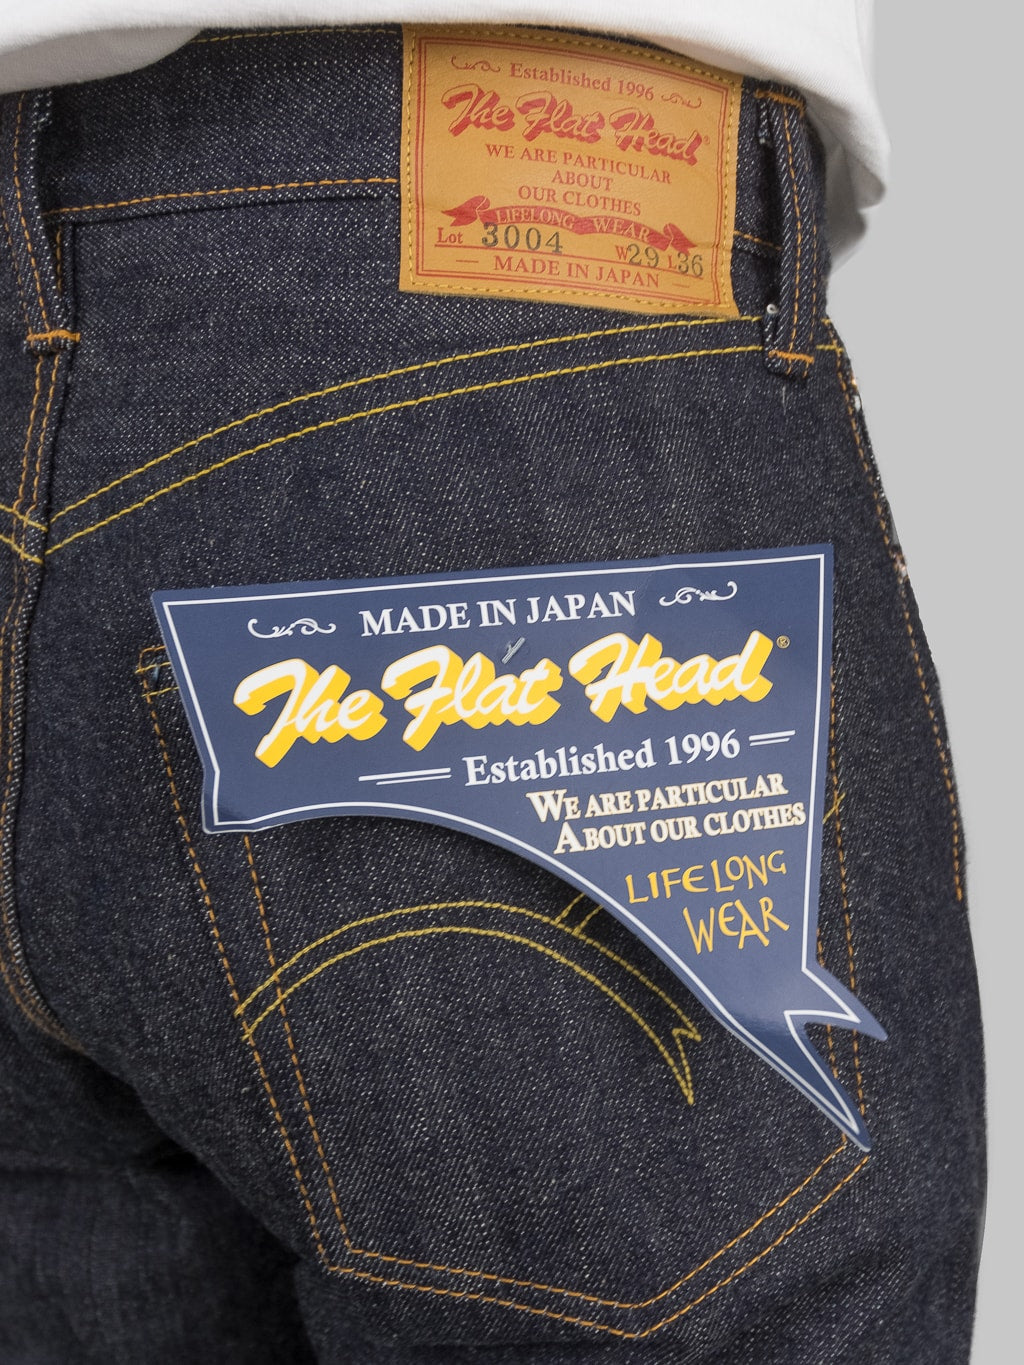 The Flat Head 3004 Regular Straight Jeans back details